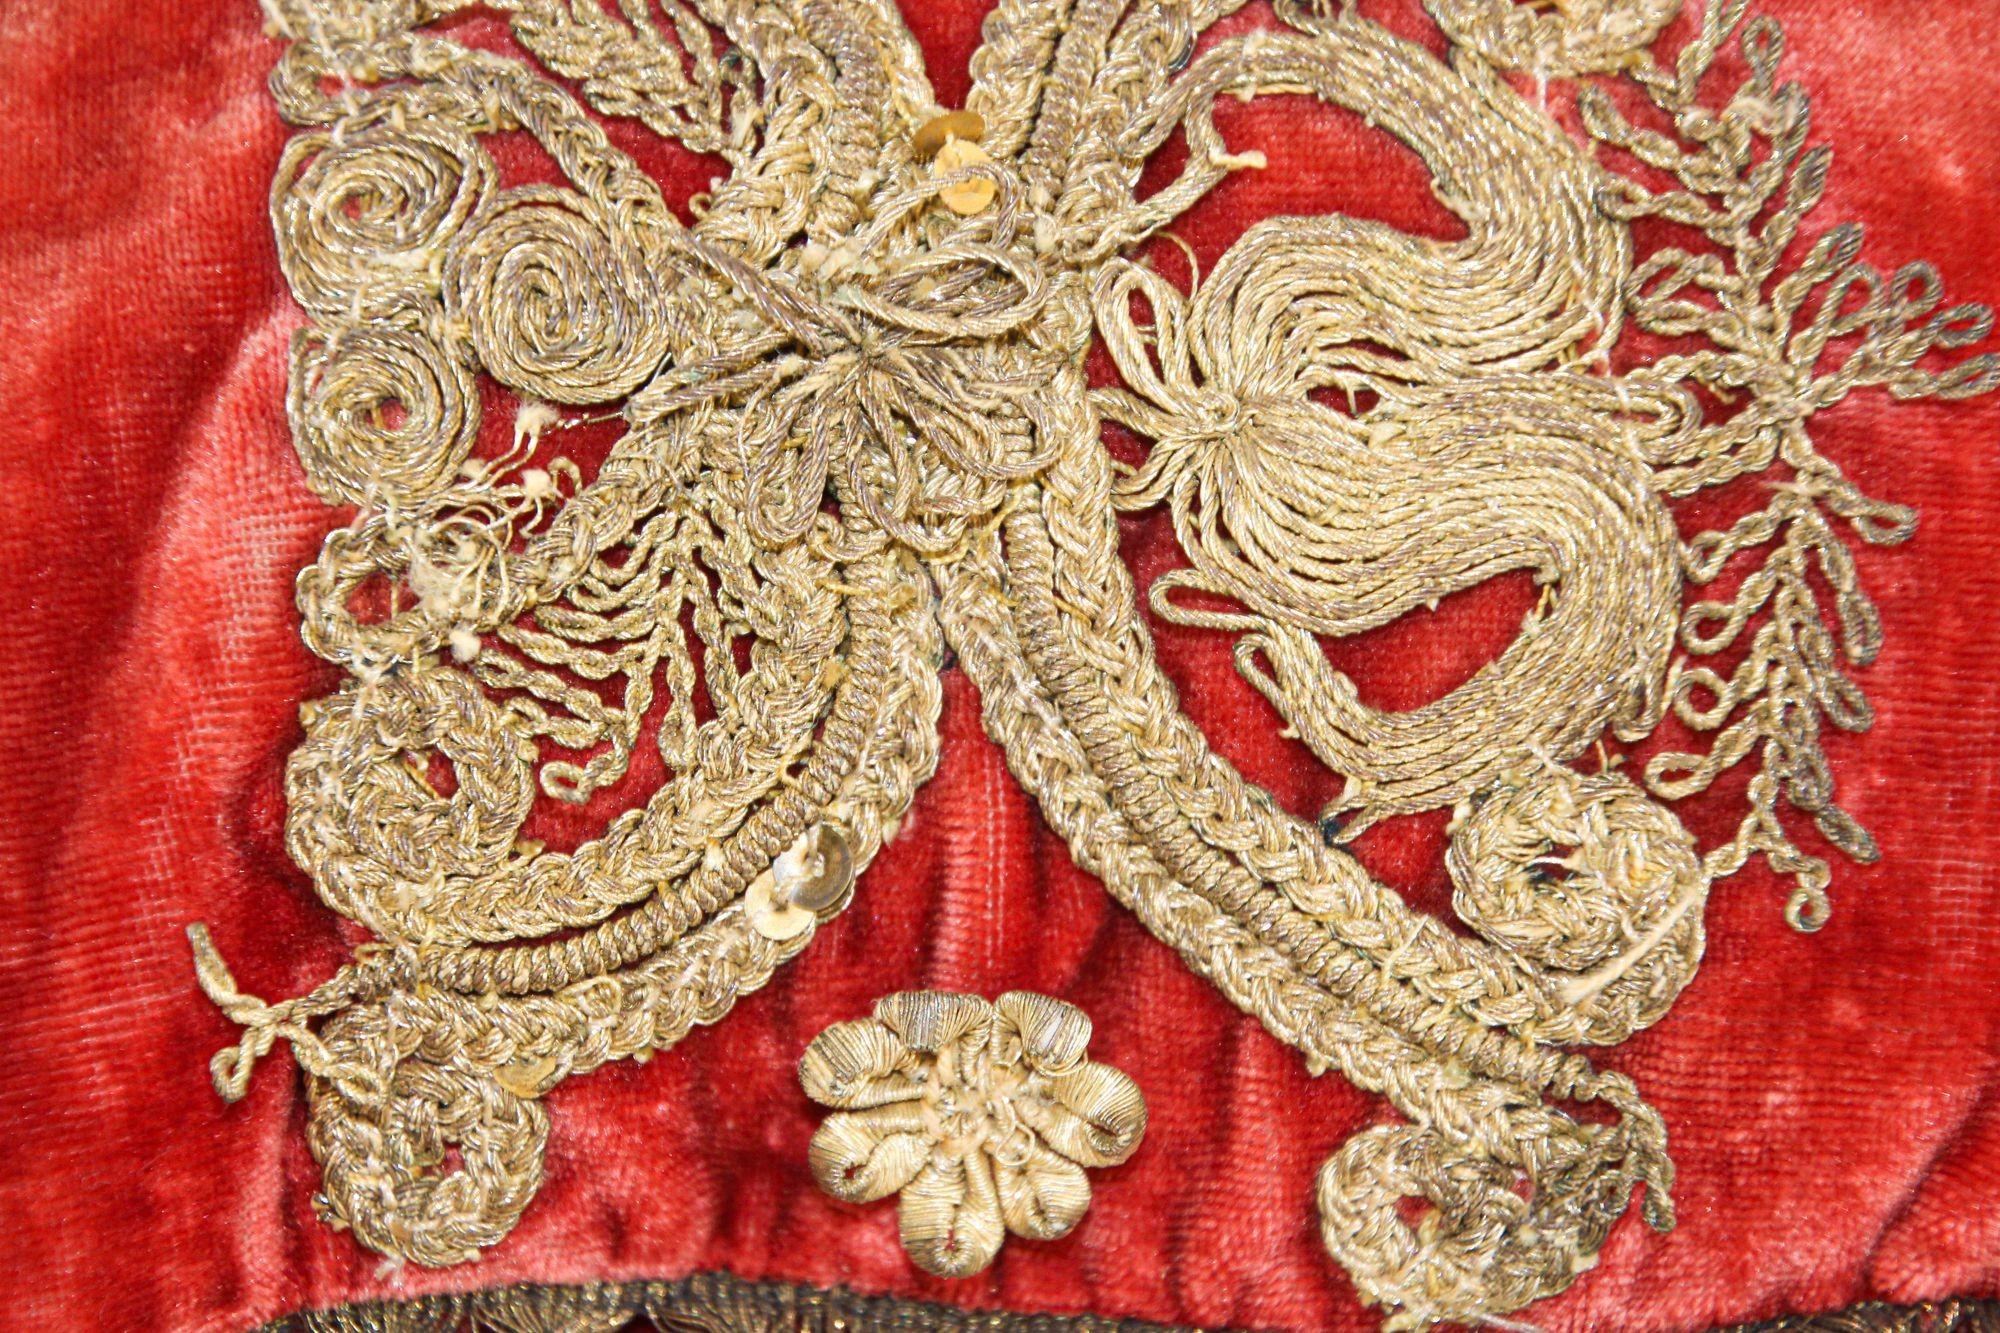 Antique Venetian Moorish Silk Velvet Throw Pillows Embellished Metallic Treads For Sale 4